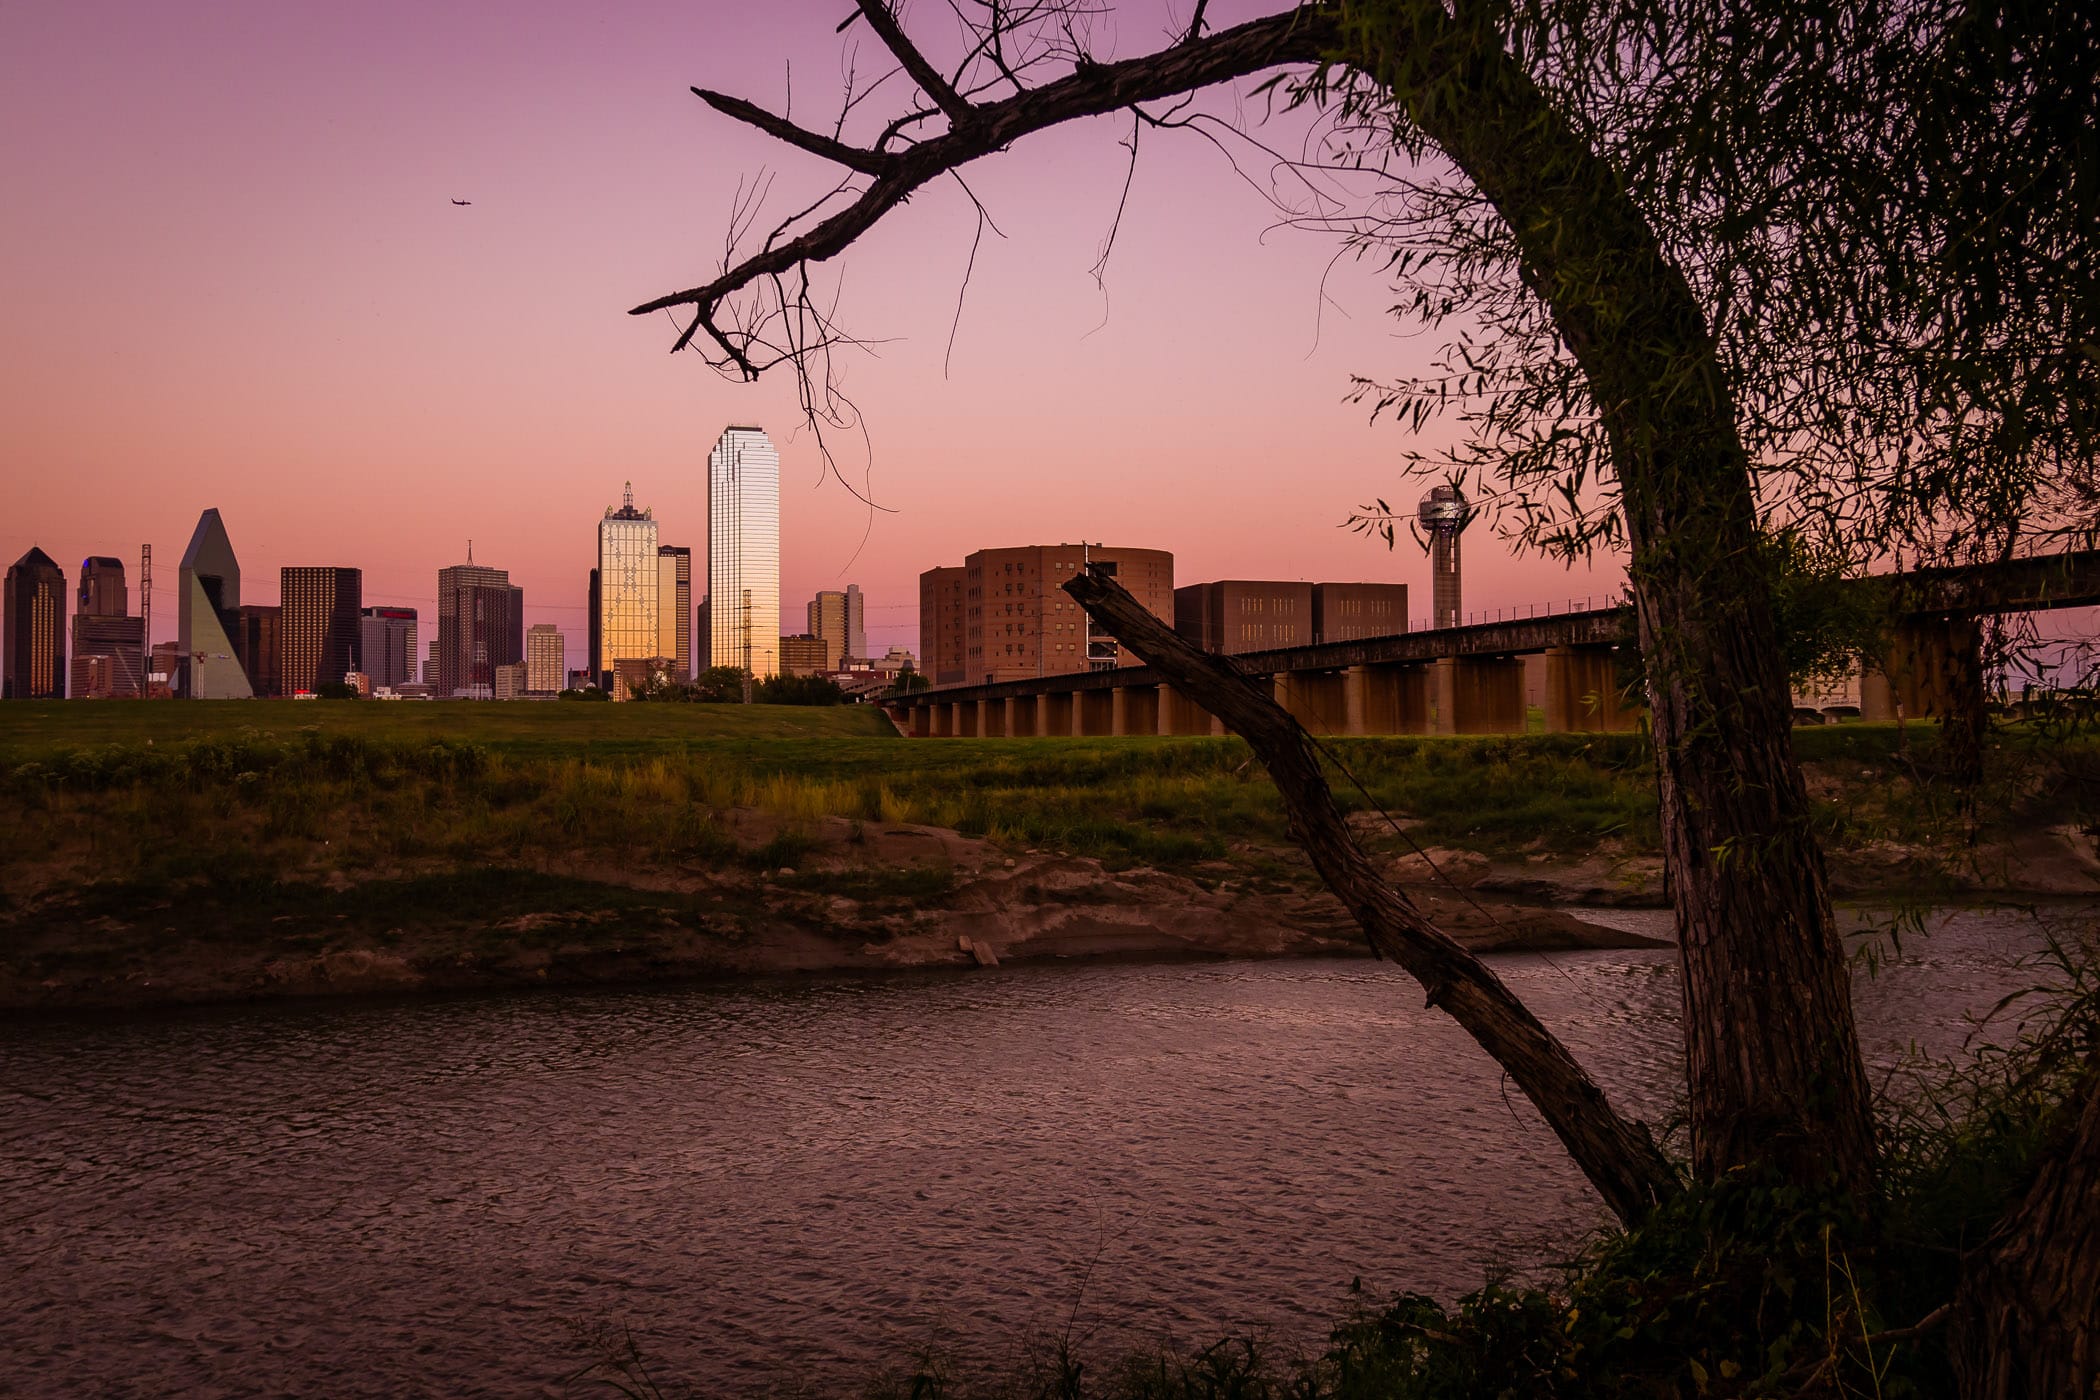 The last light of the day illuminates the Dallas skyline.